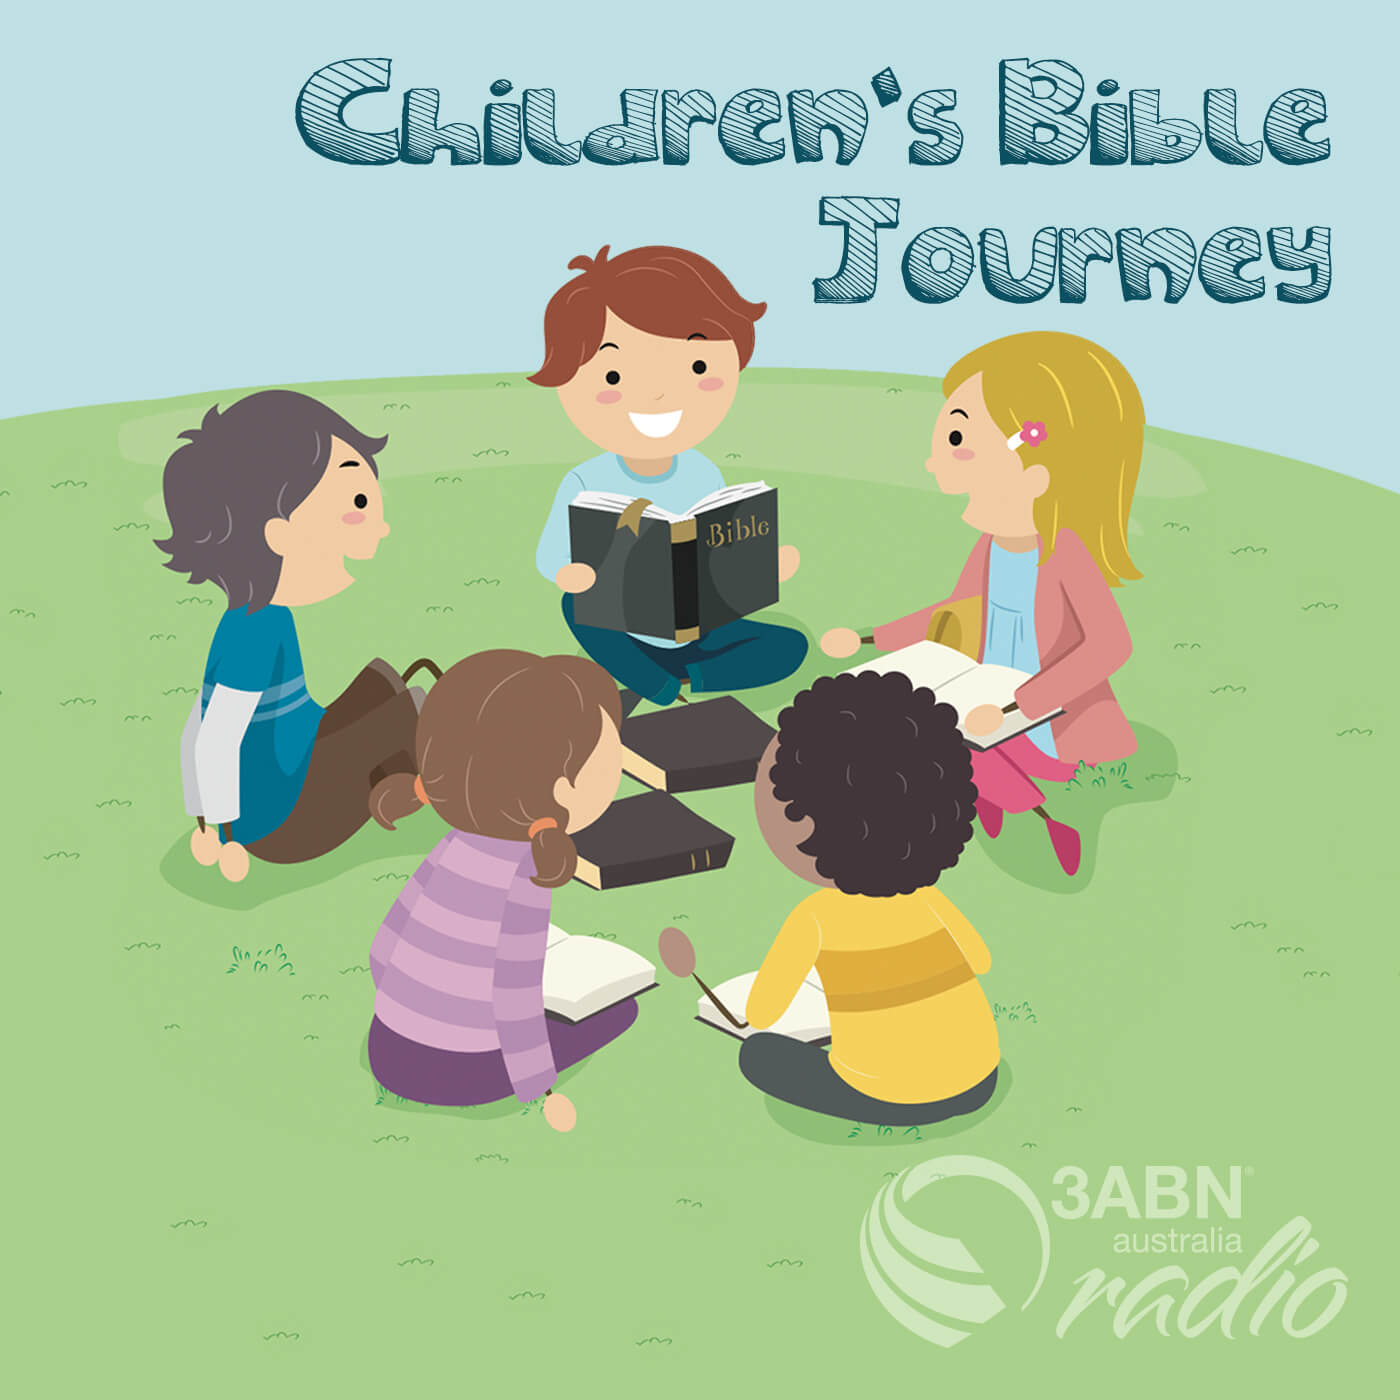 Children's Bible Journey - 2209